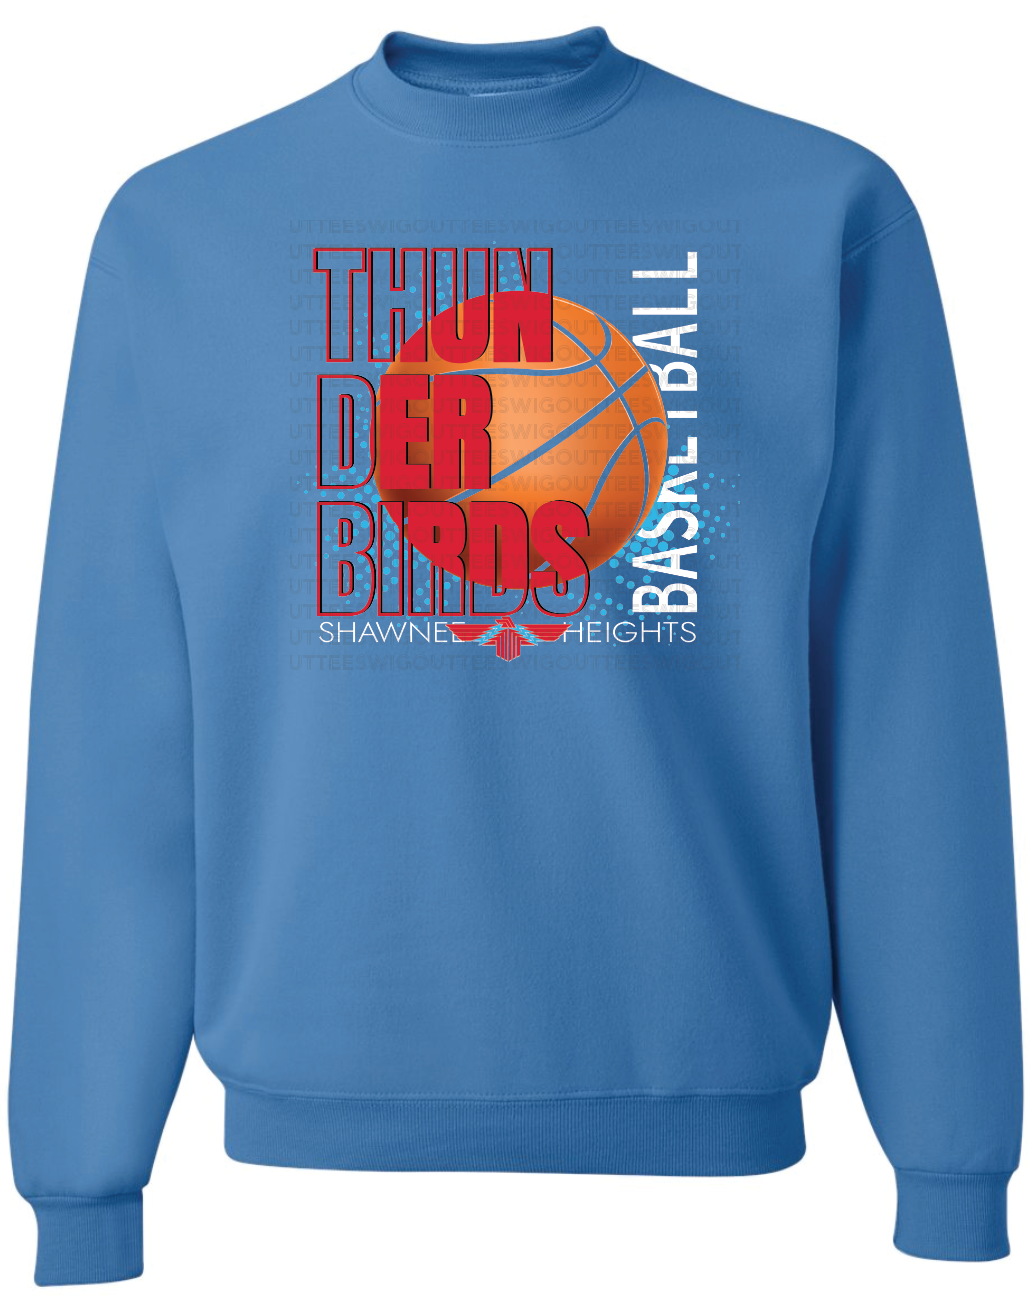 Thunderbirds Basketball Jerzees Nublend Crew Sweatshirt